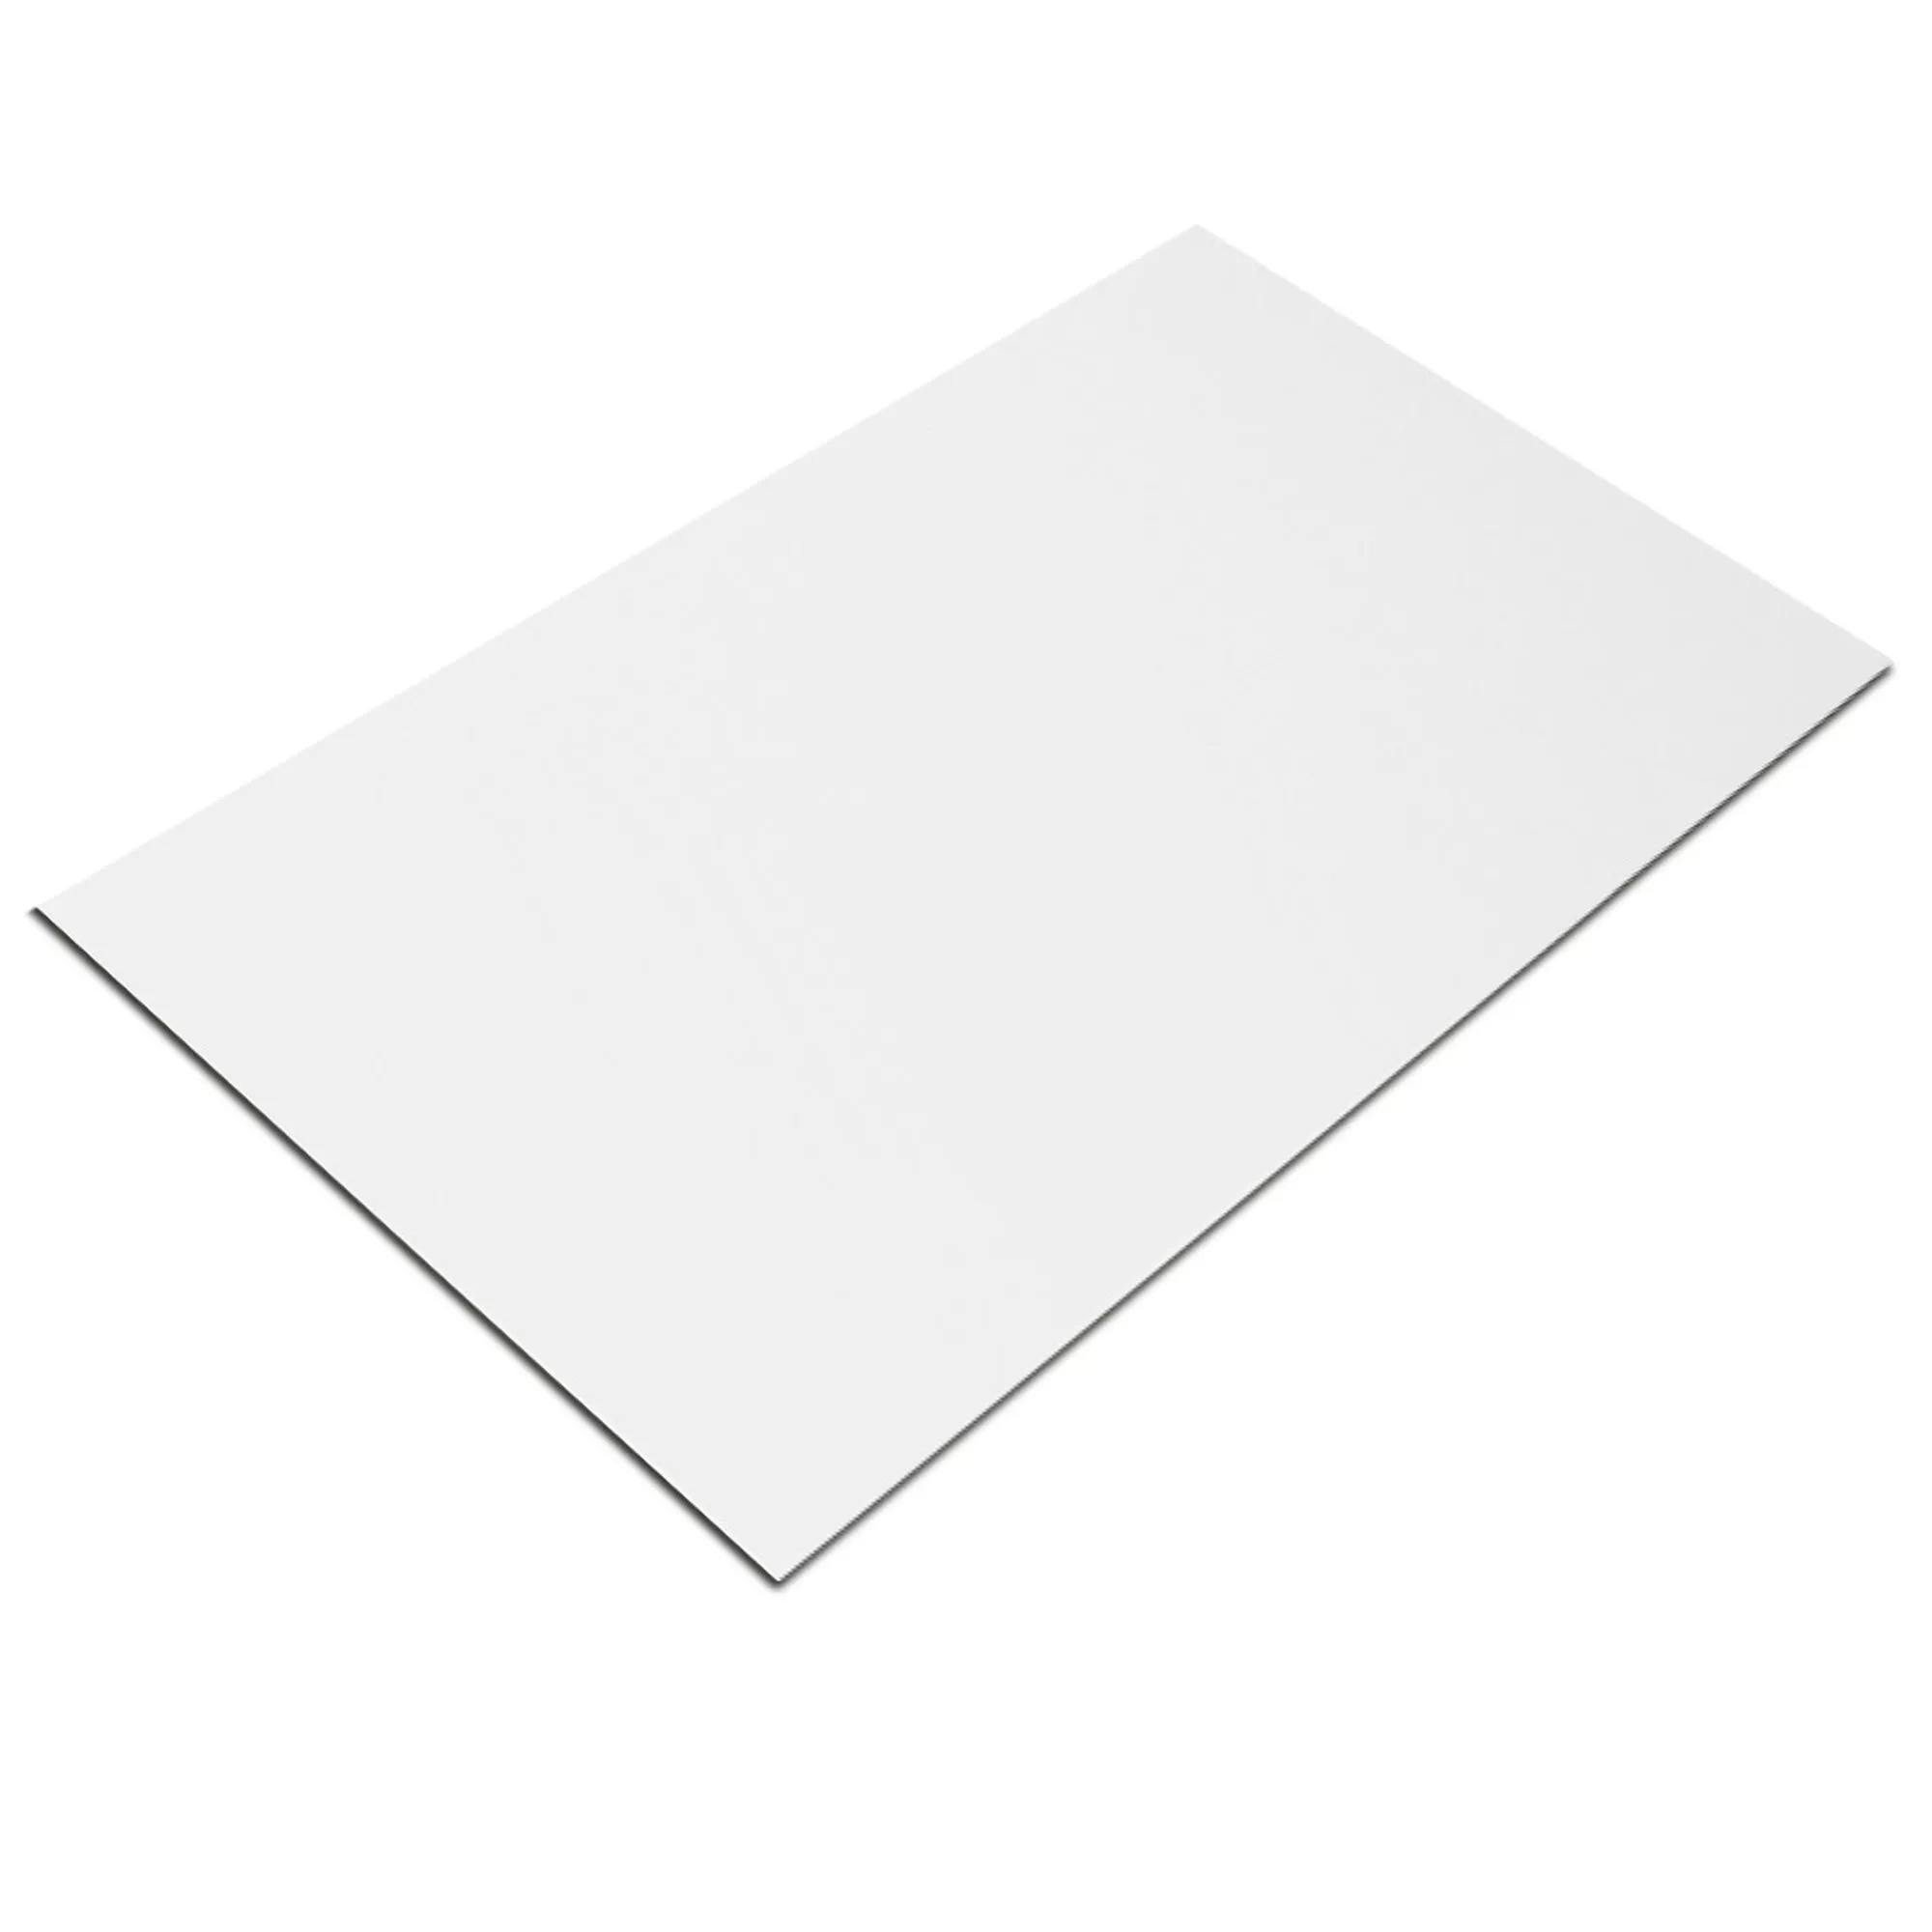 Sample Wall Tiles Fenway White Mat 15x20cm